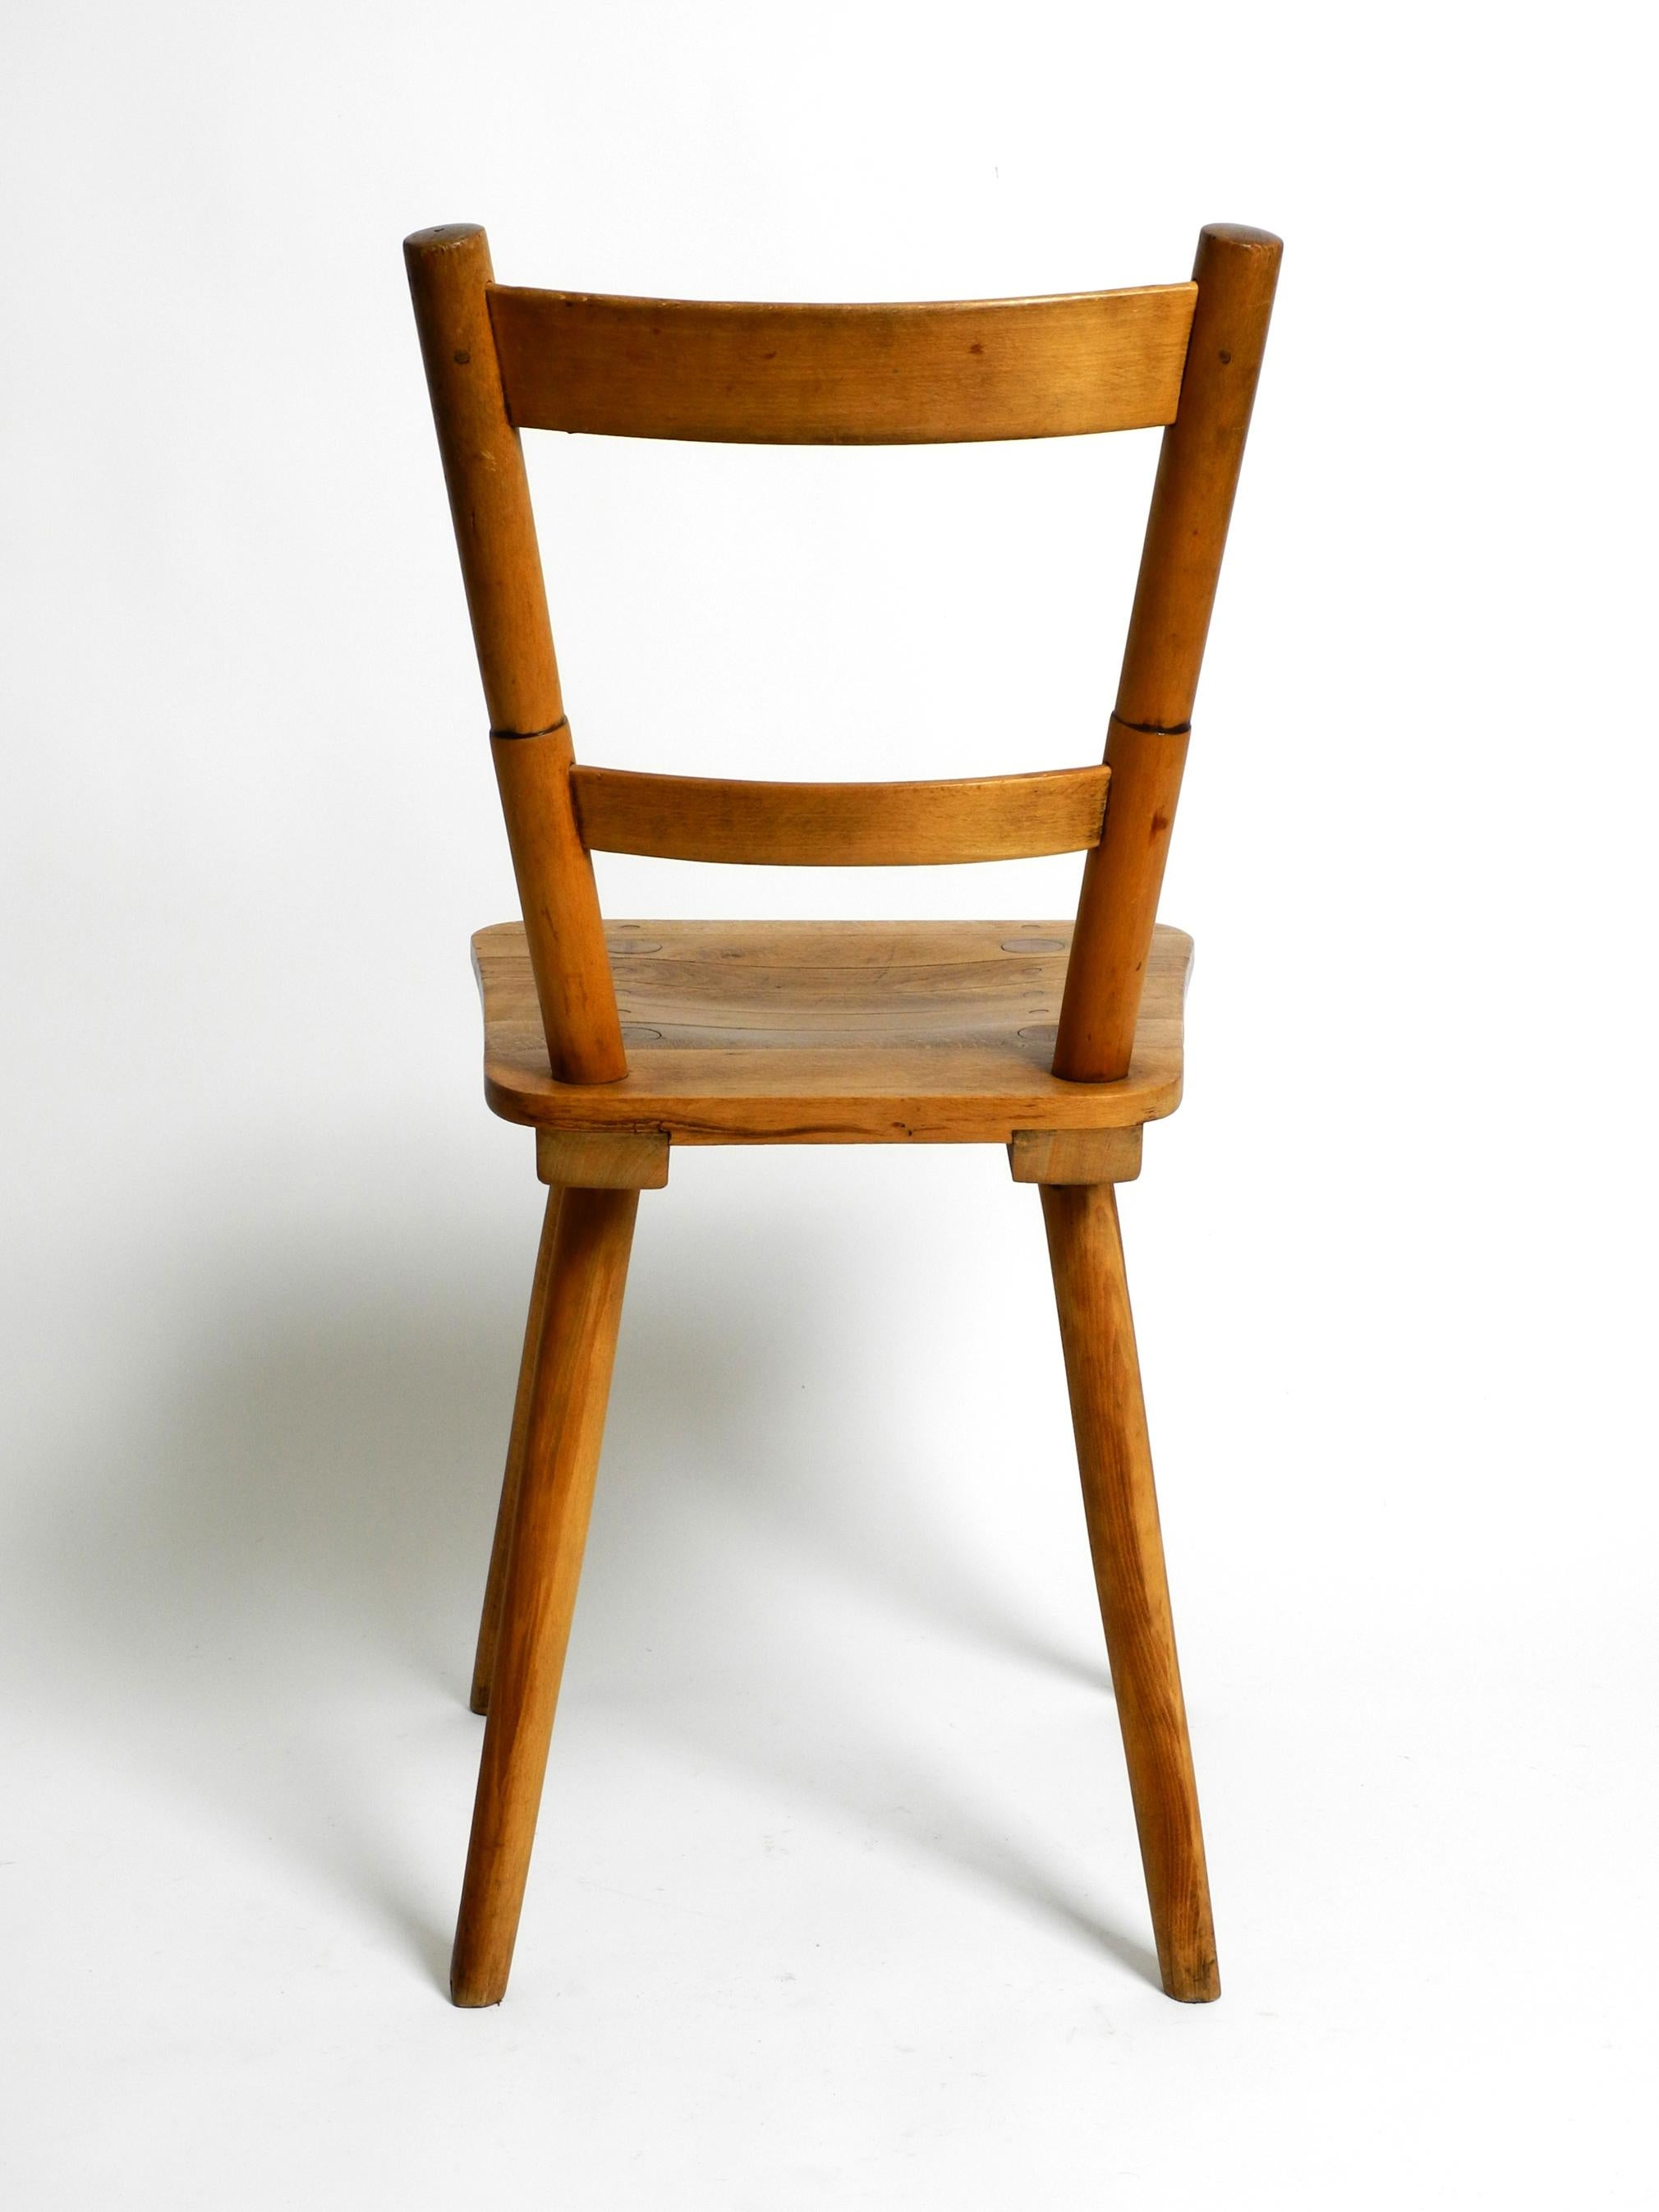 1930s Tübinger chair by the architect Prof. Adolf Gustav Schneck for Schäfer  For Sale 10